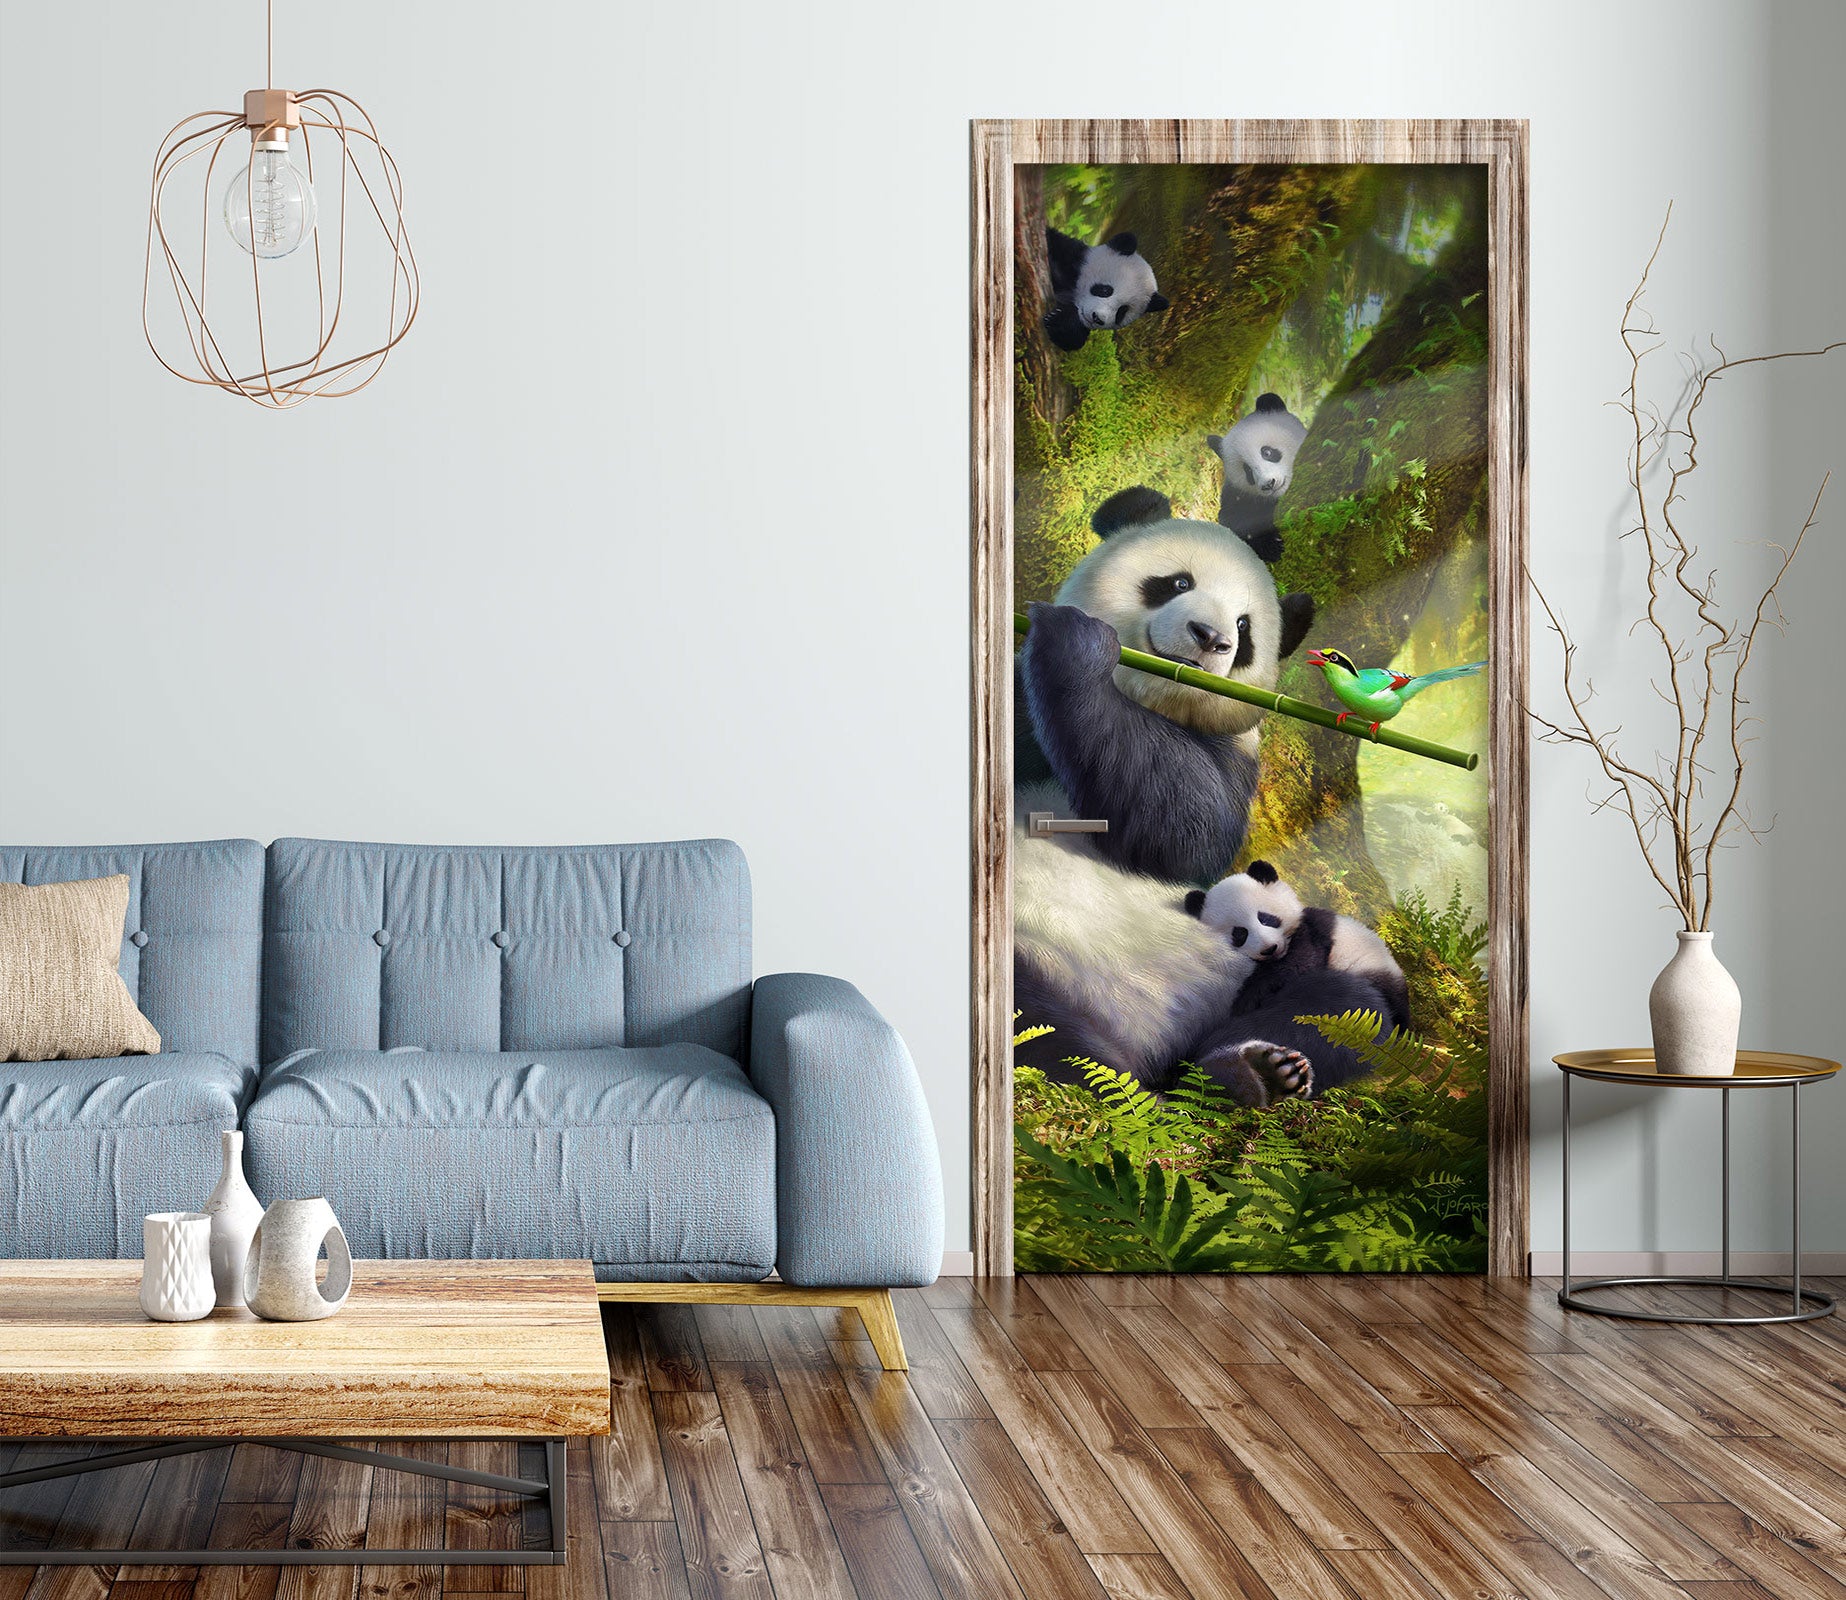 3D Panda 112145 Jerry LoFaro Door Mural